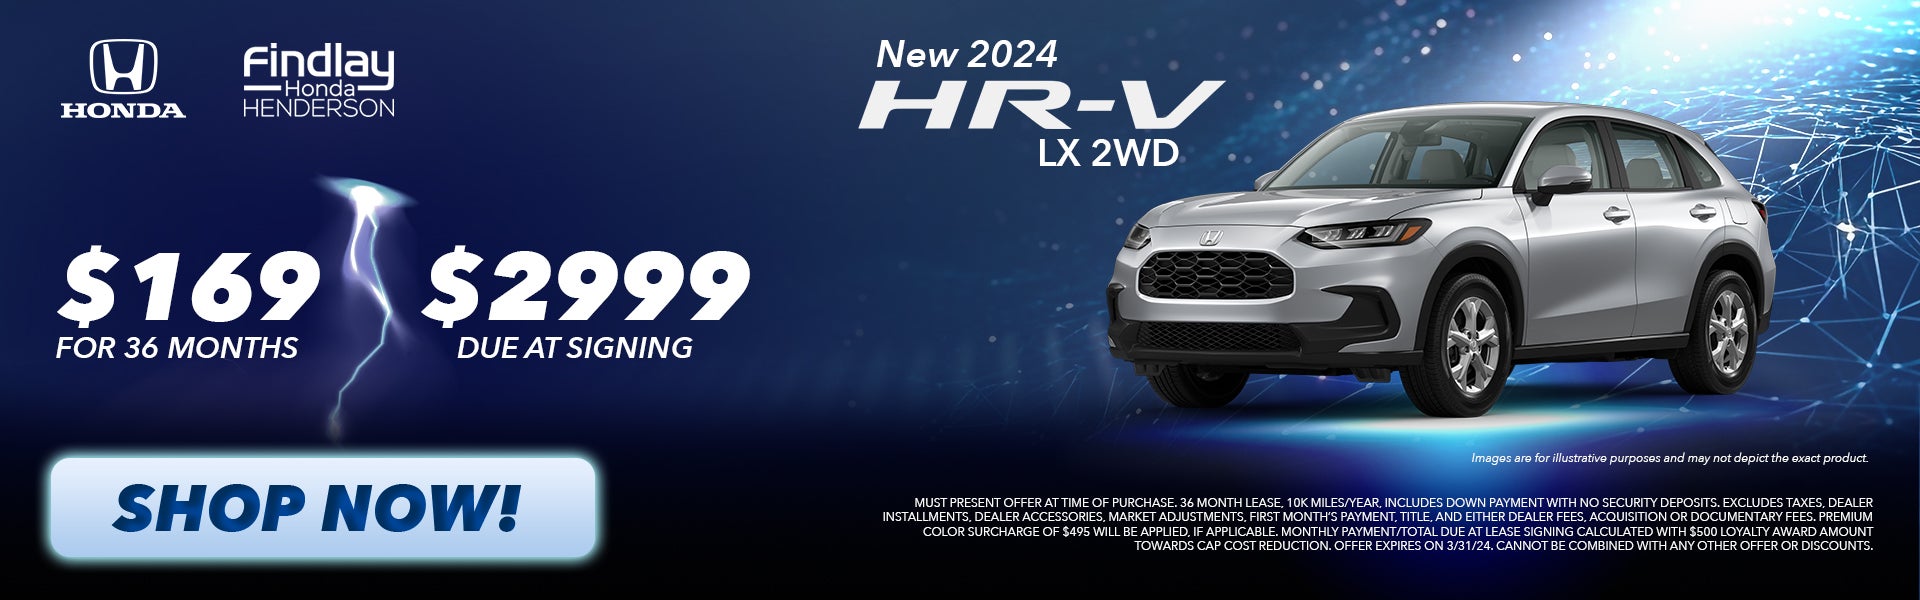 2024 HR-V LX 2WD